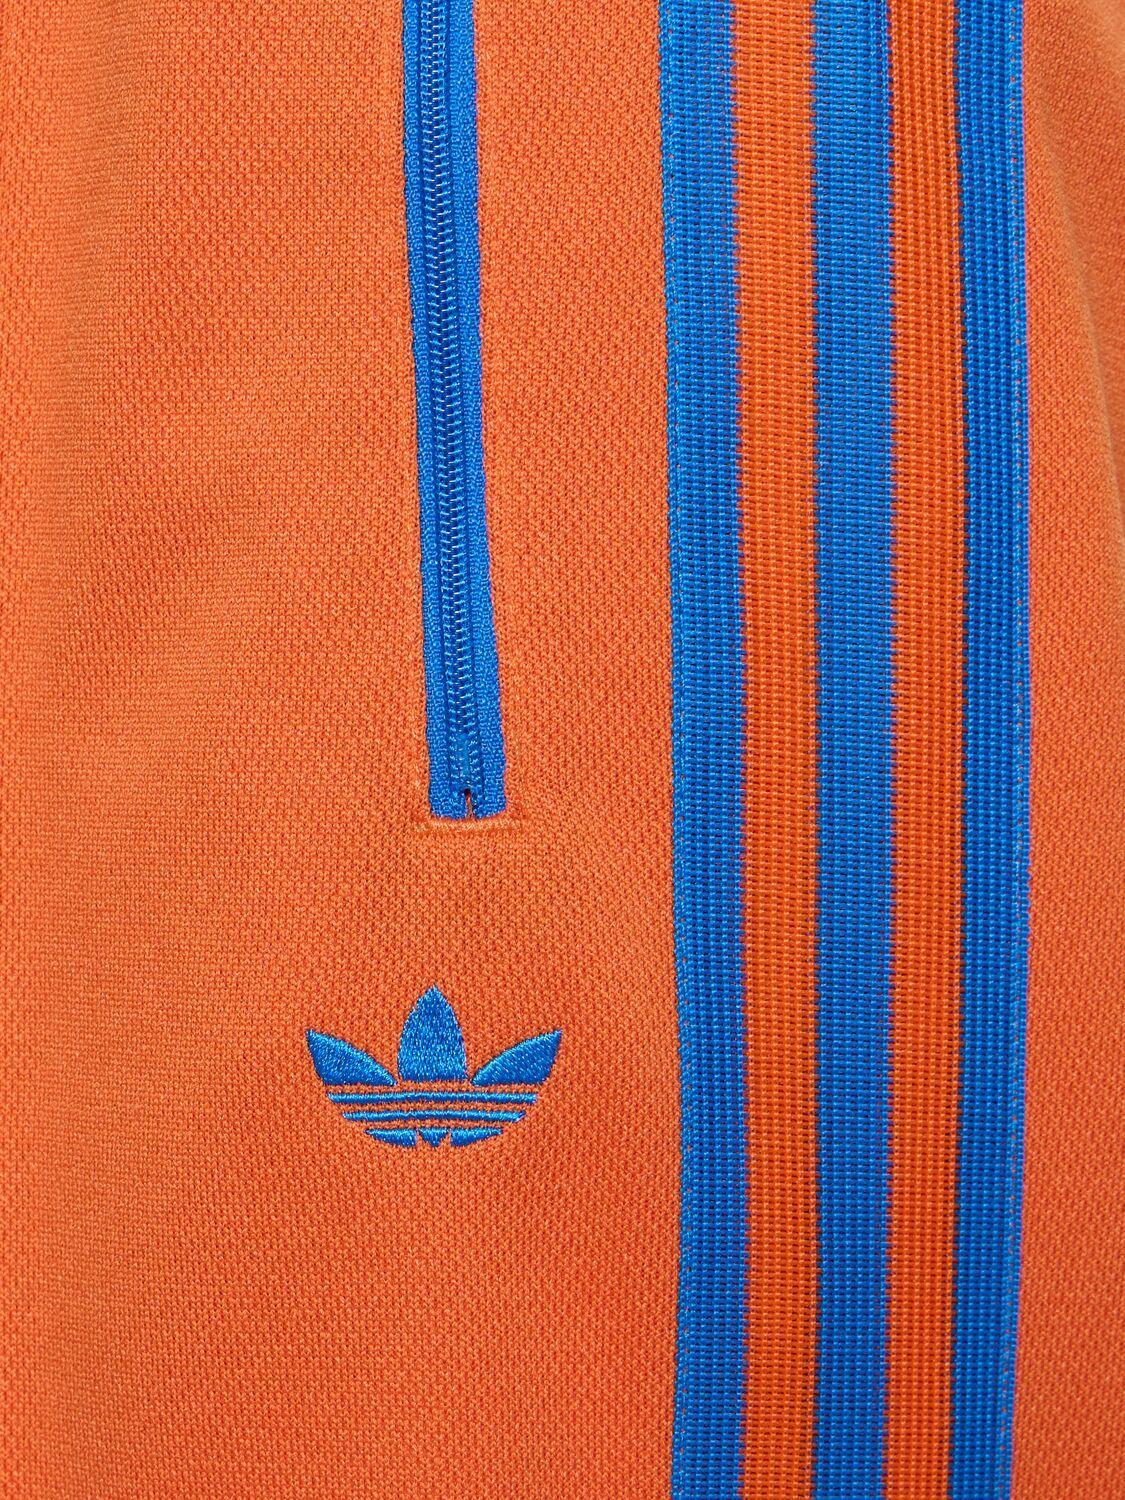 adidas Originals Montreal Track Pants in Orange | Lyst